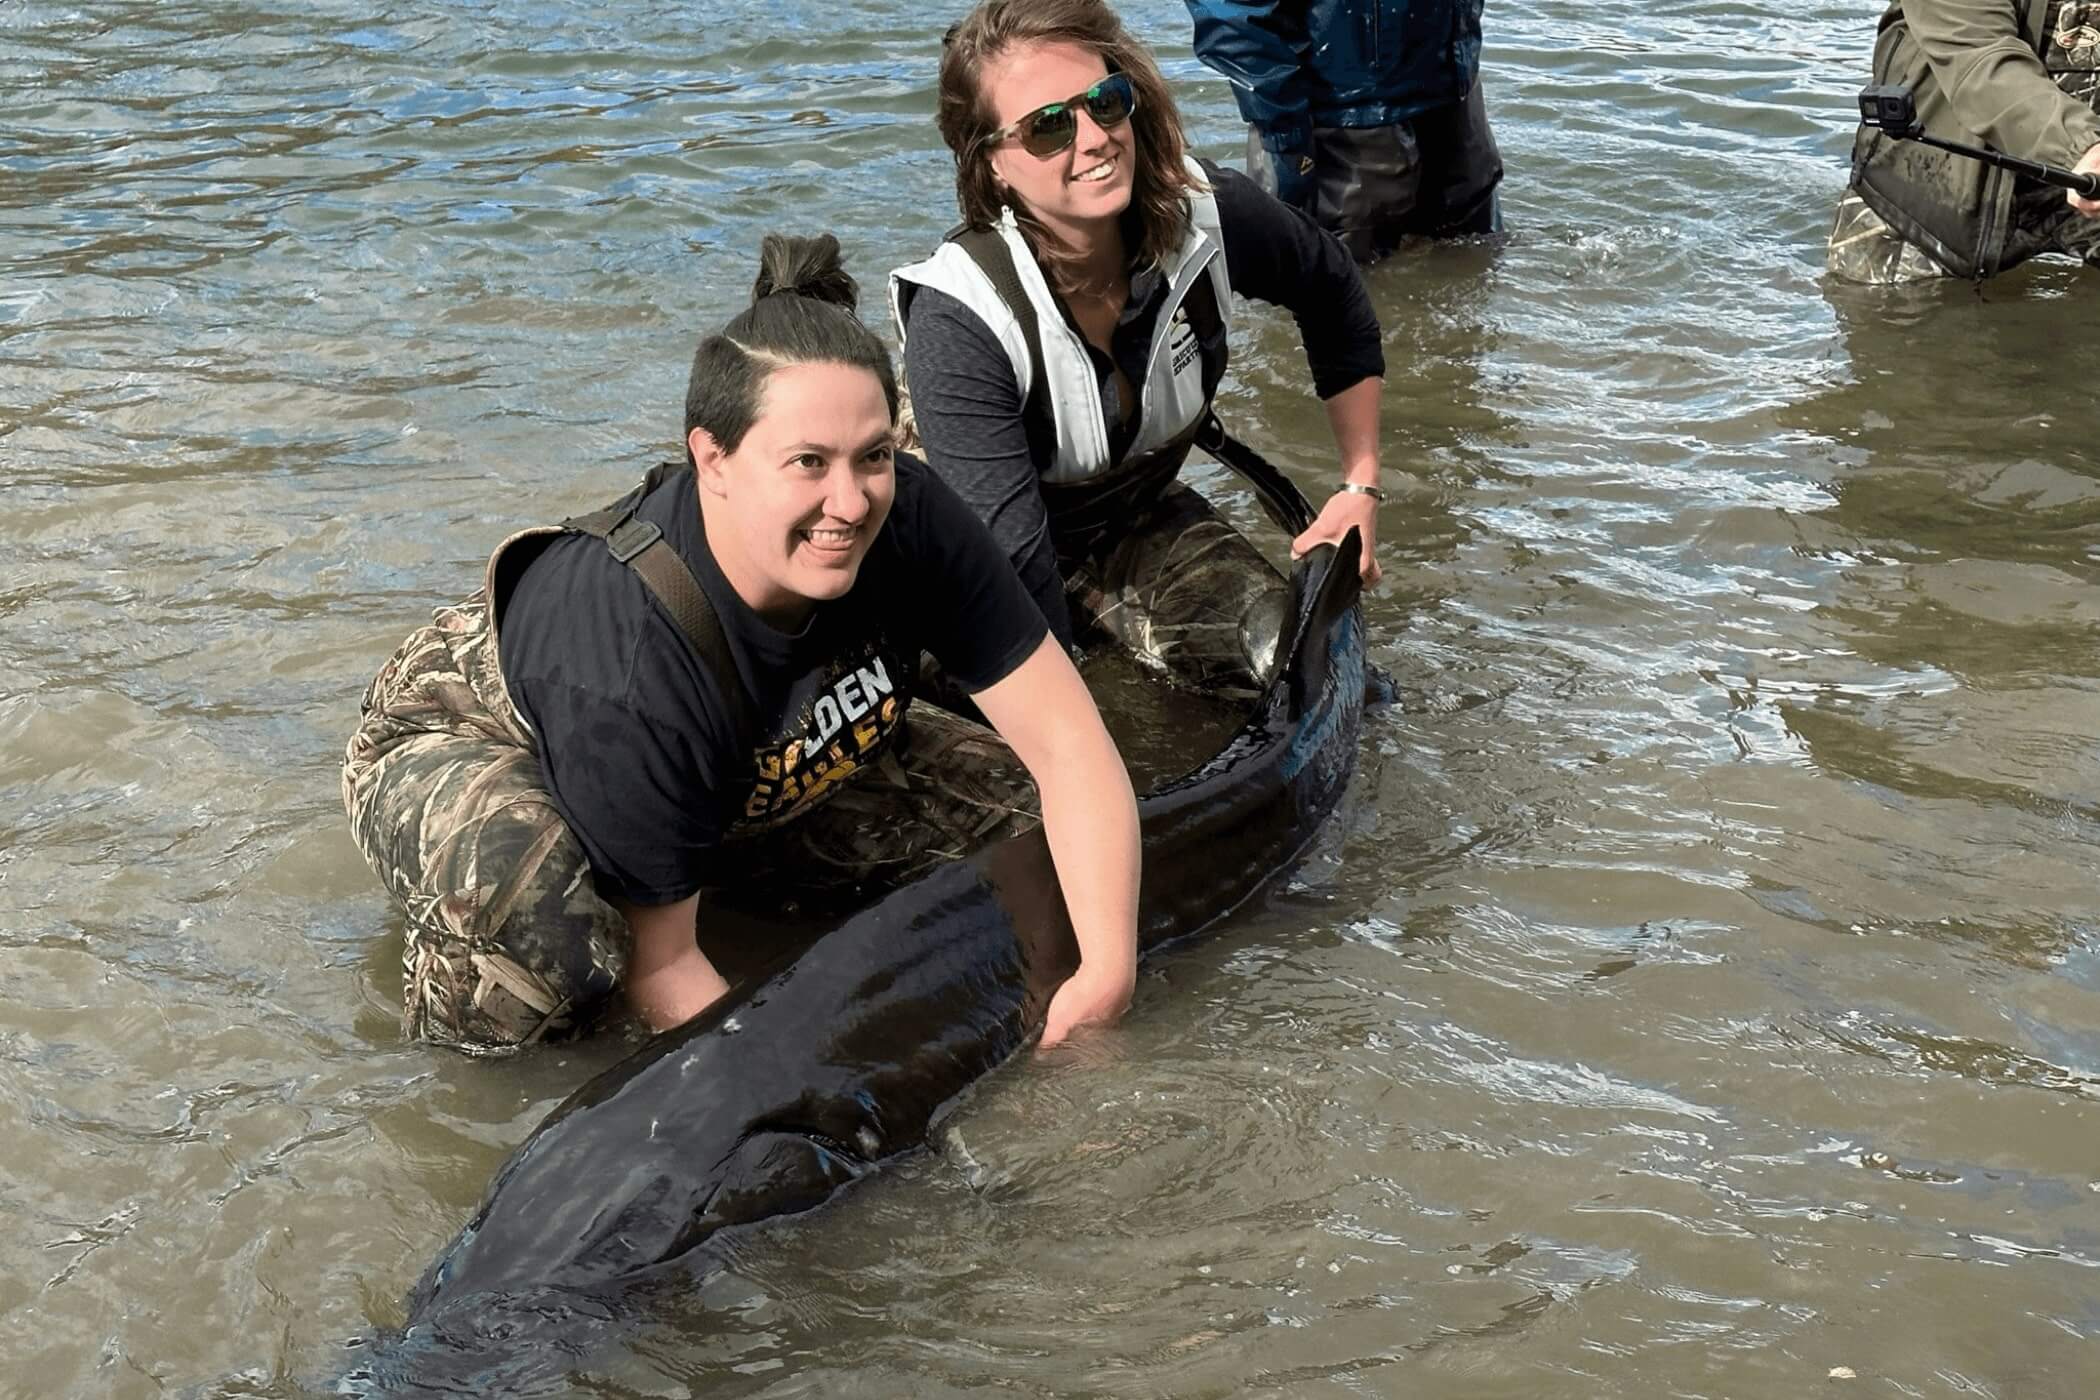 aquaculture students holding a large sturgeon